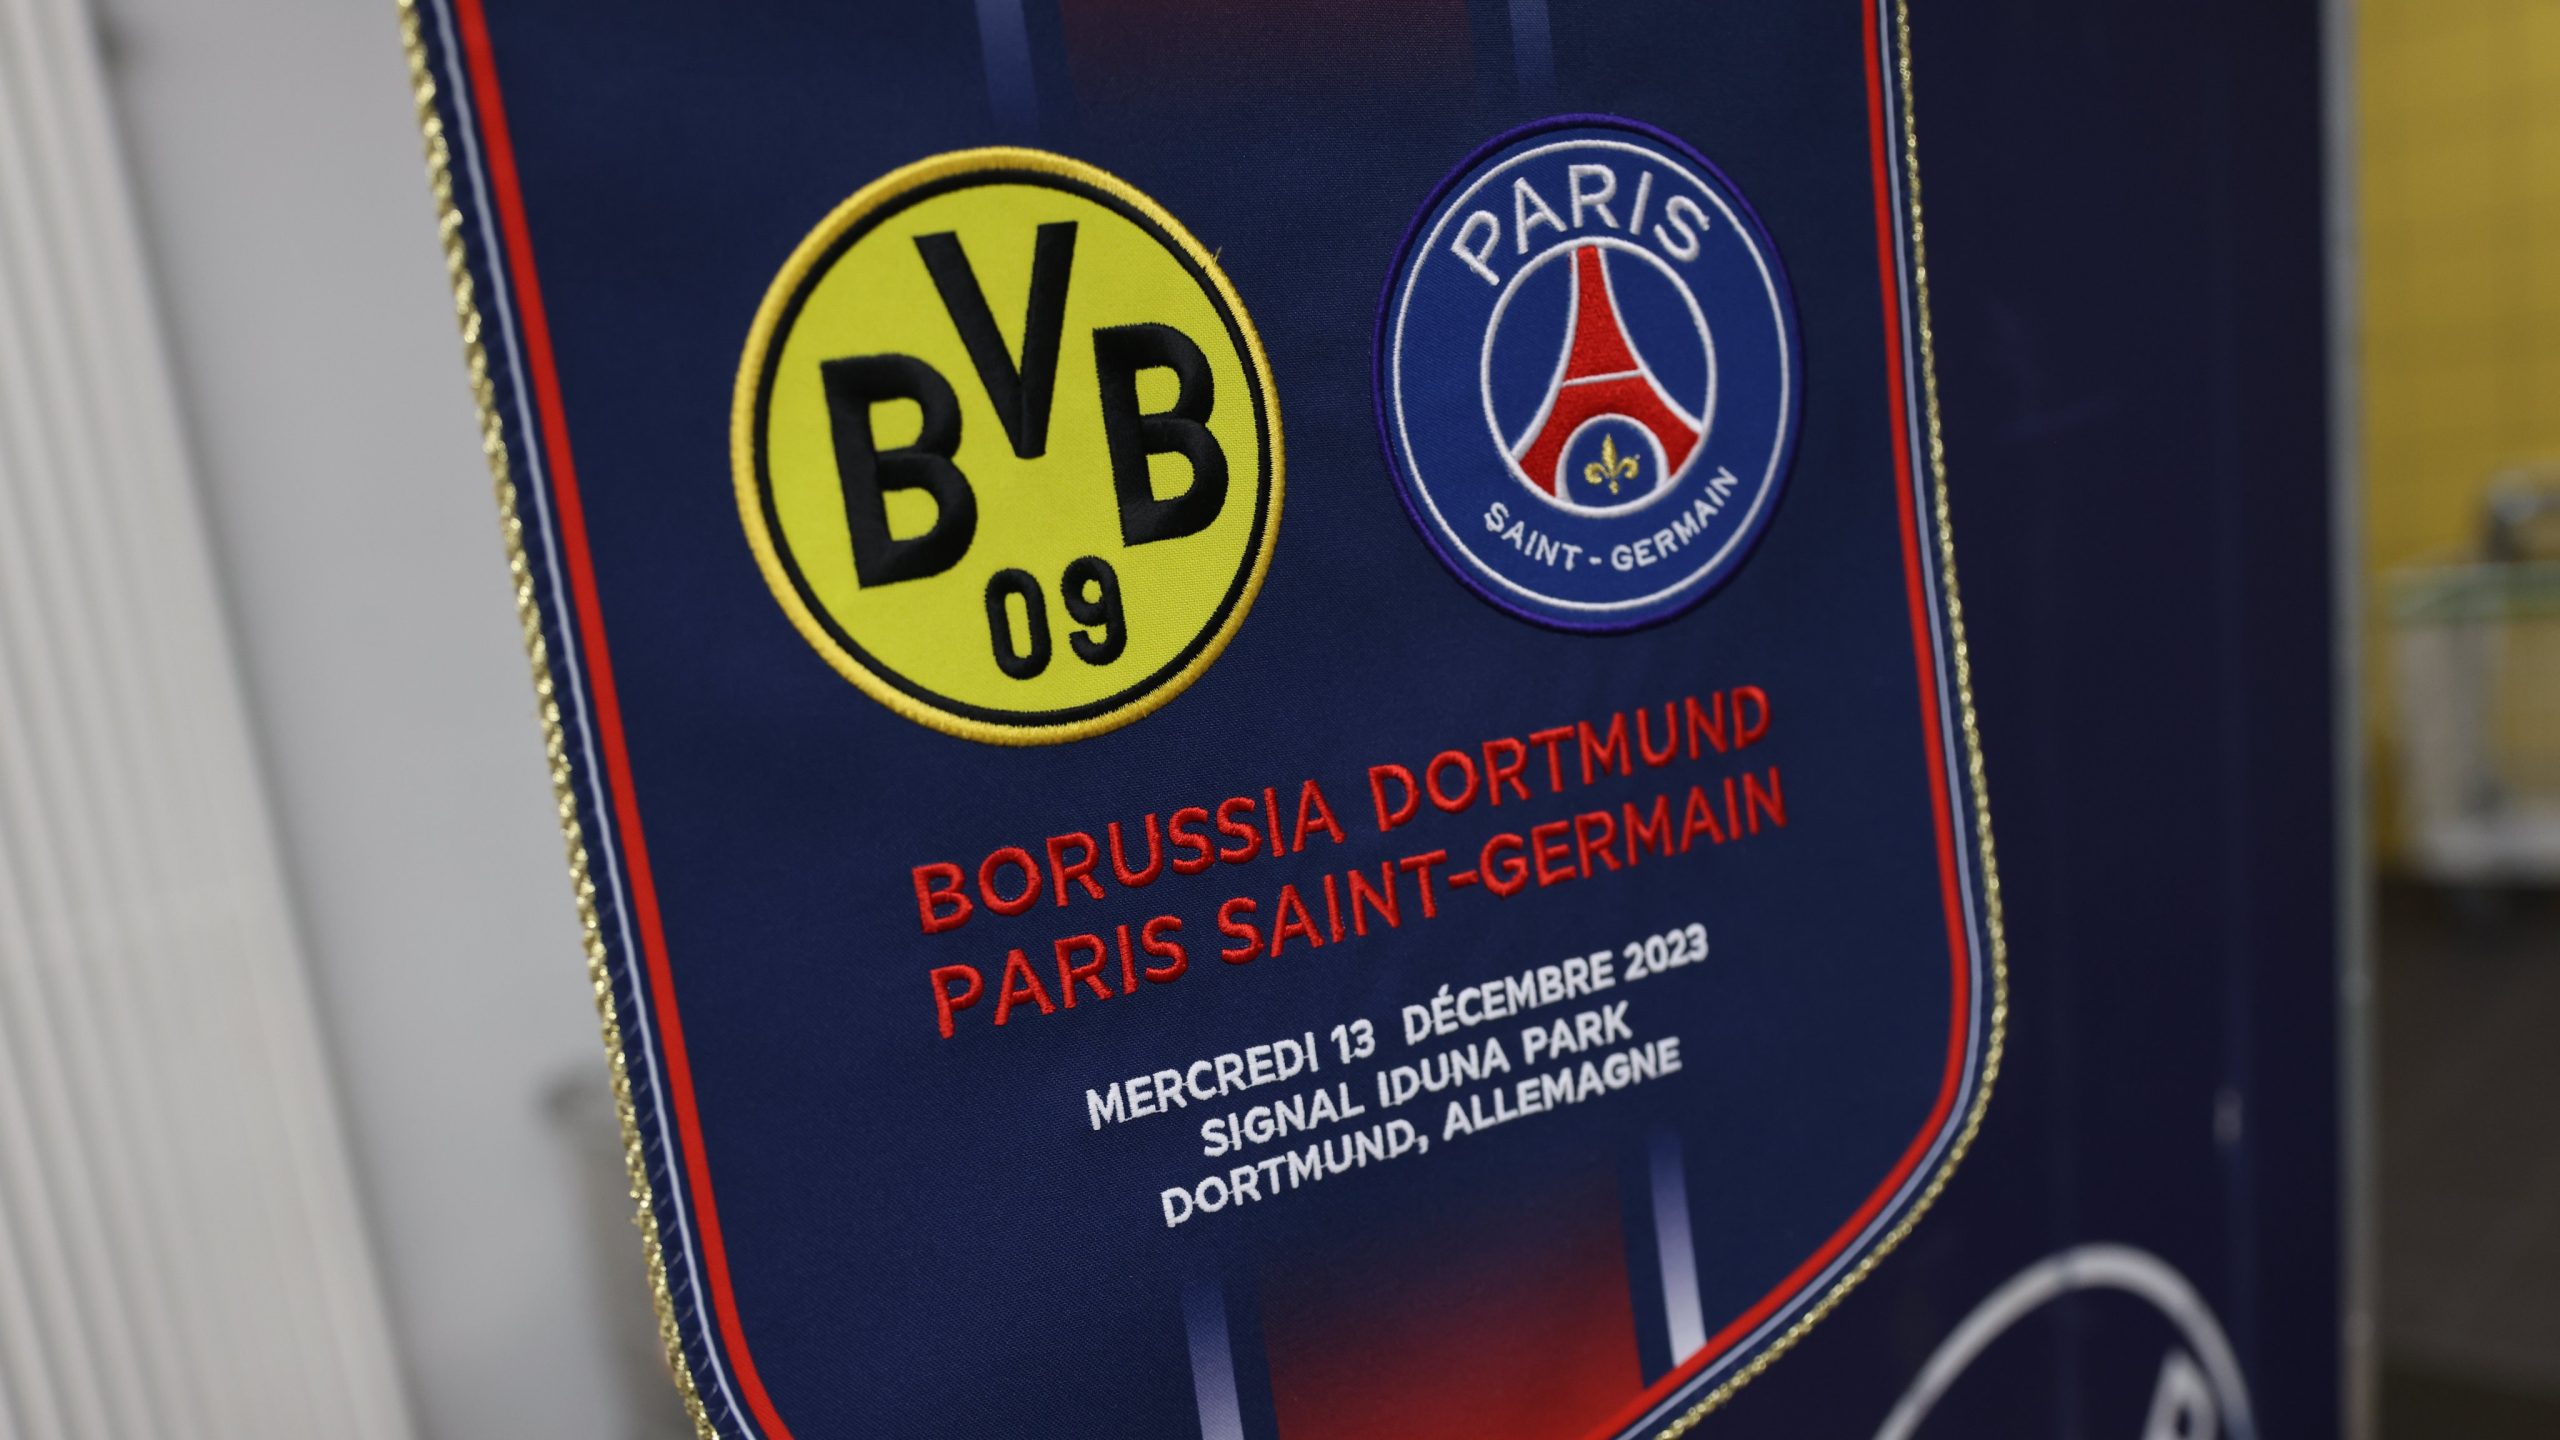 How to follow the Borussia Dortmund - Paris Saint-Germain match live - Media7